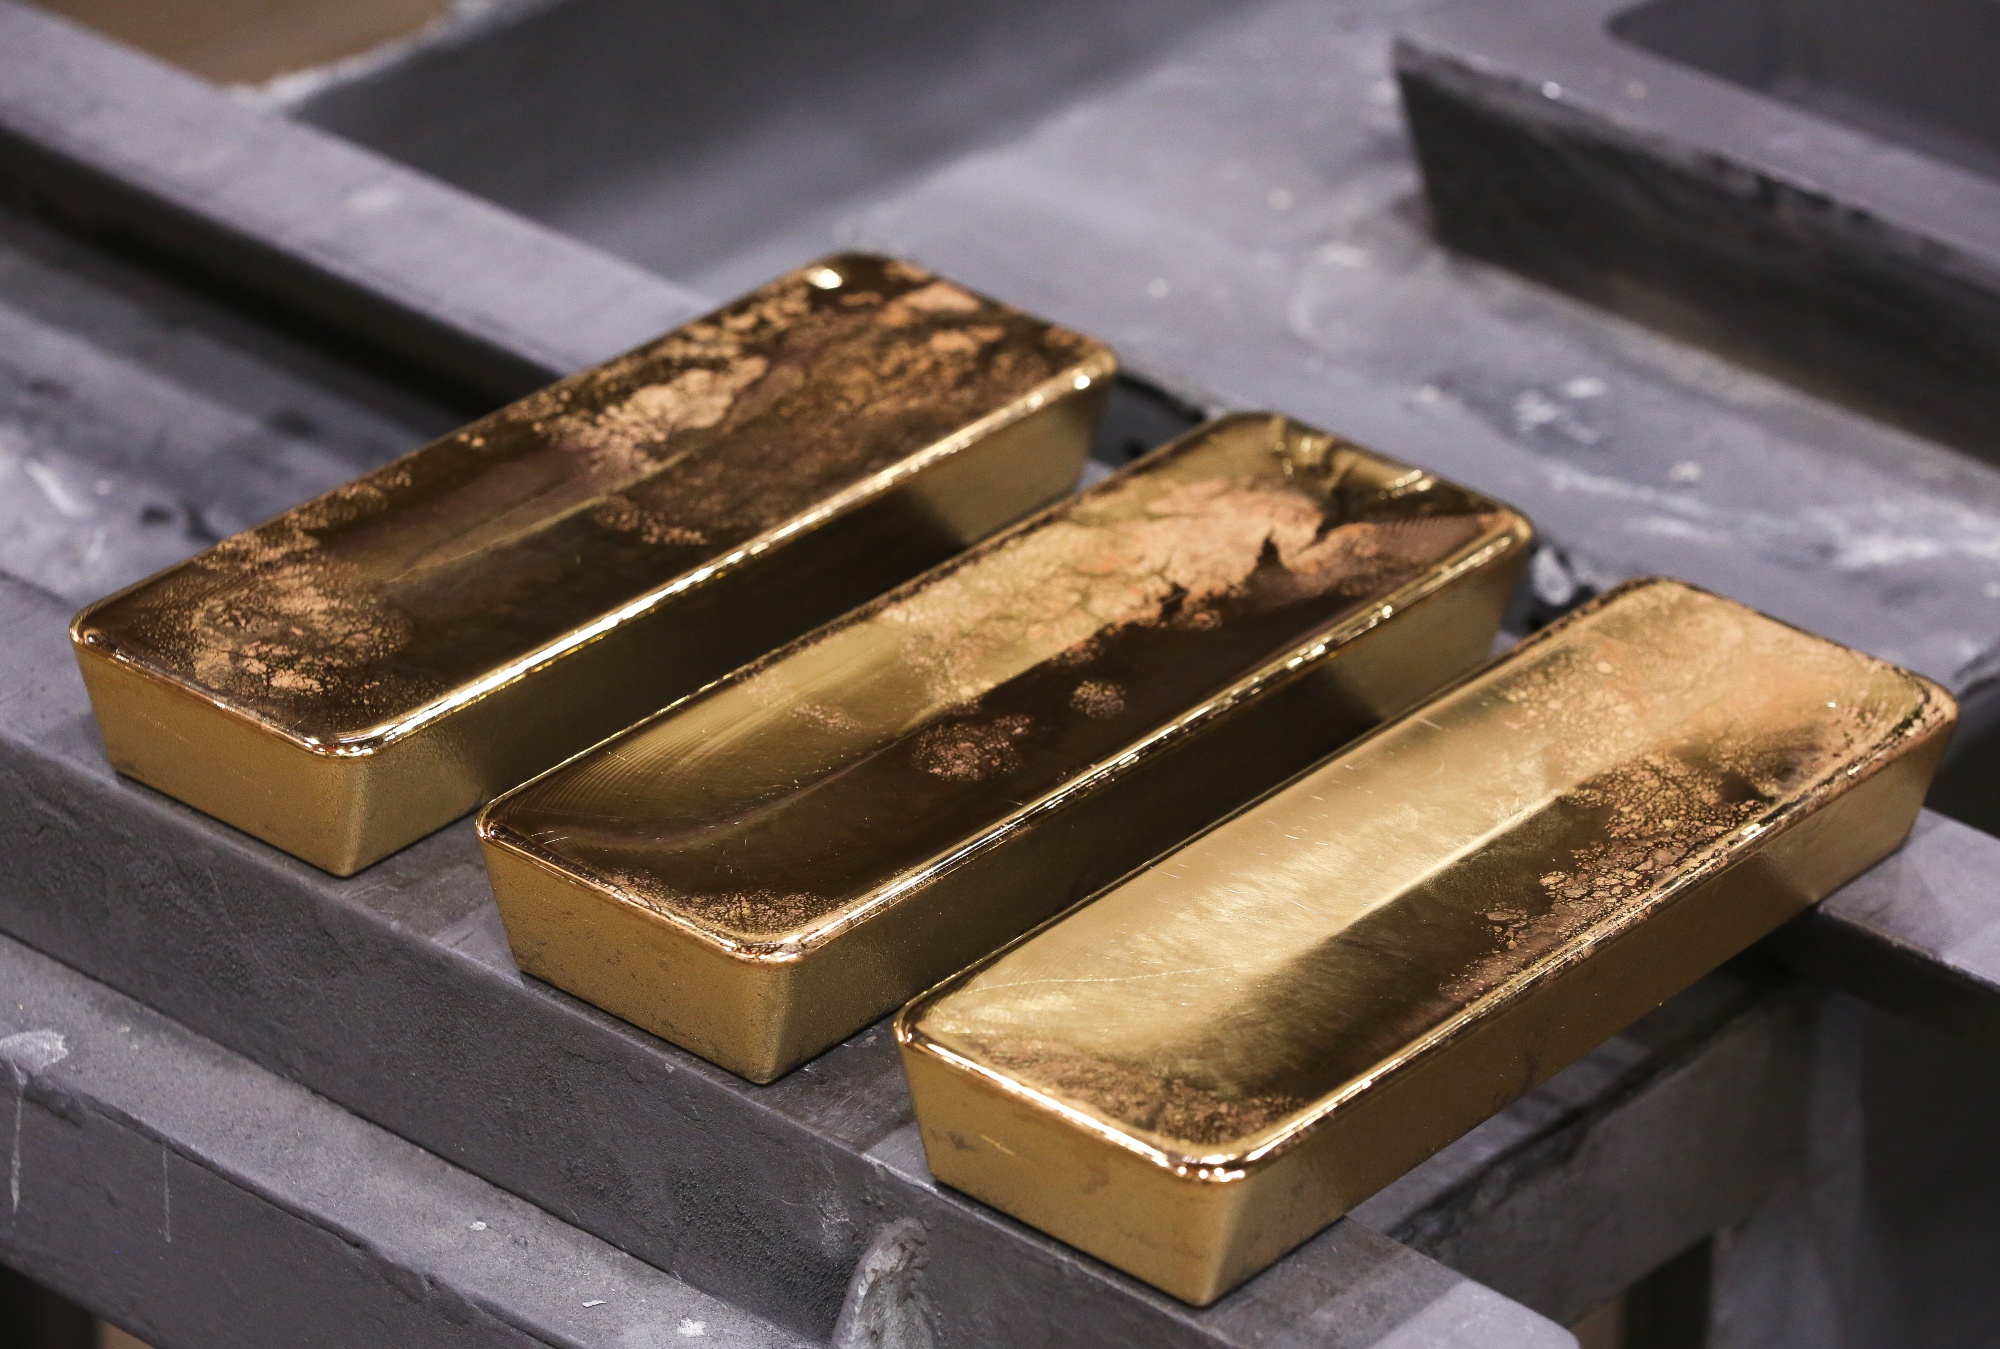 Gold Production At The JSC Krastsvetmet Precious Metals Plant